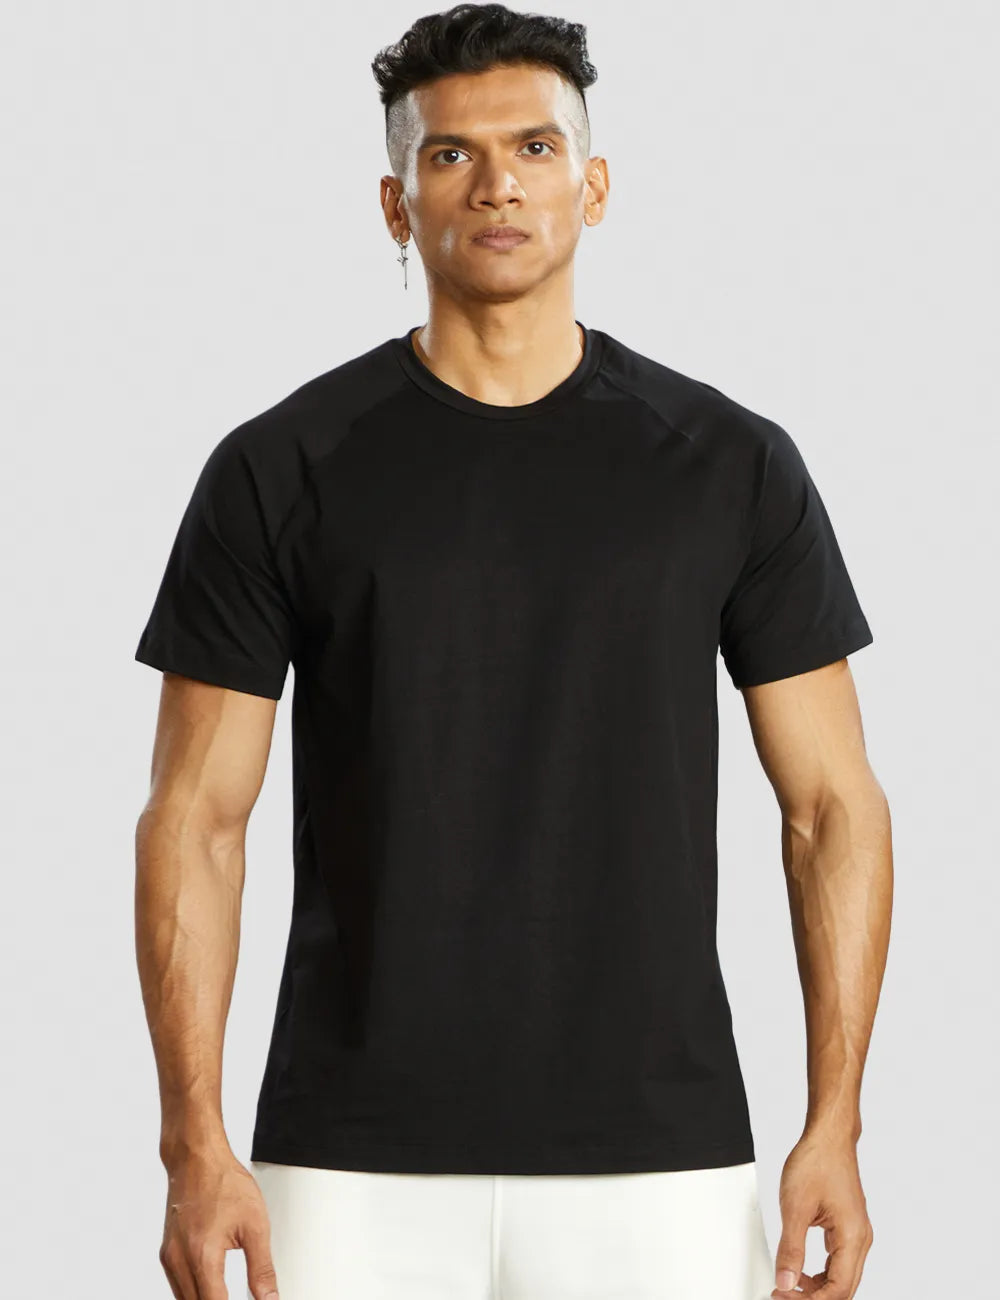 Muscle Fit T-shirt Men - Brwon